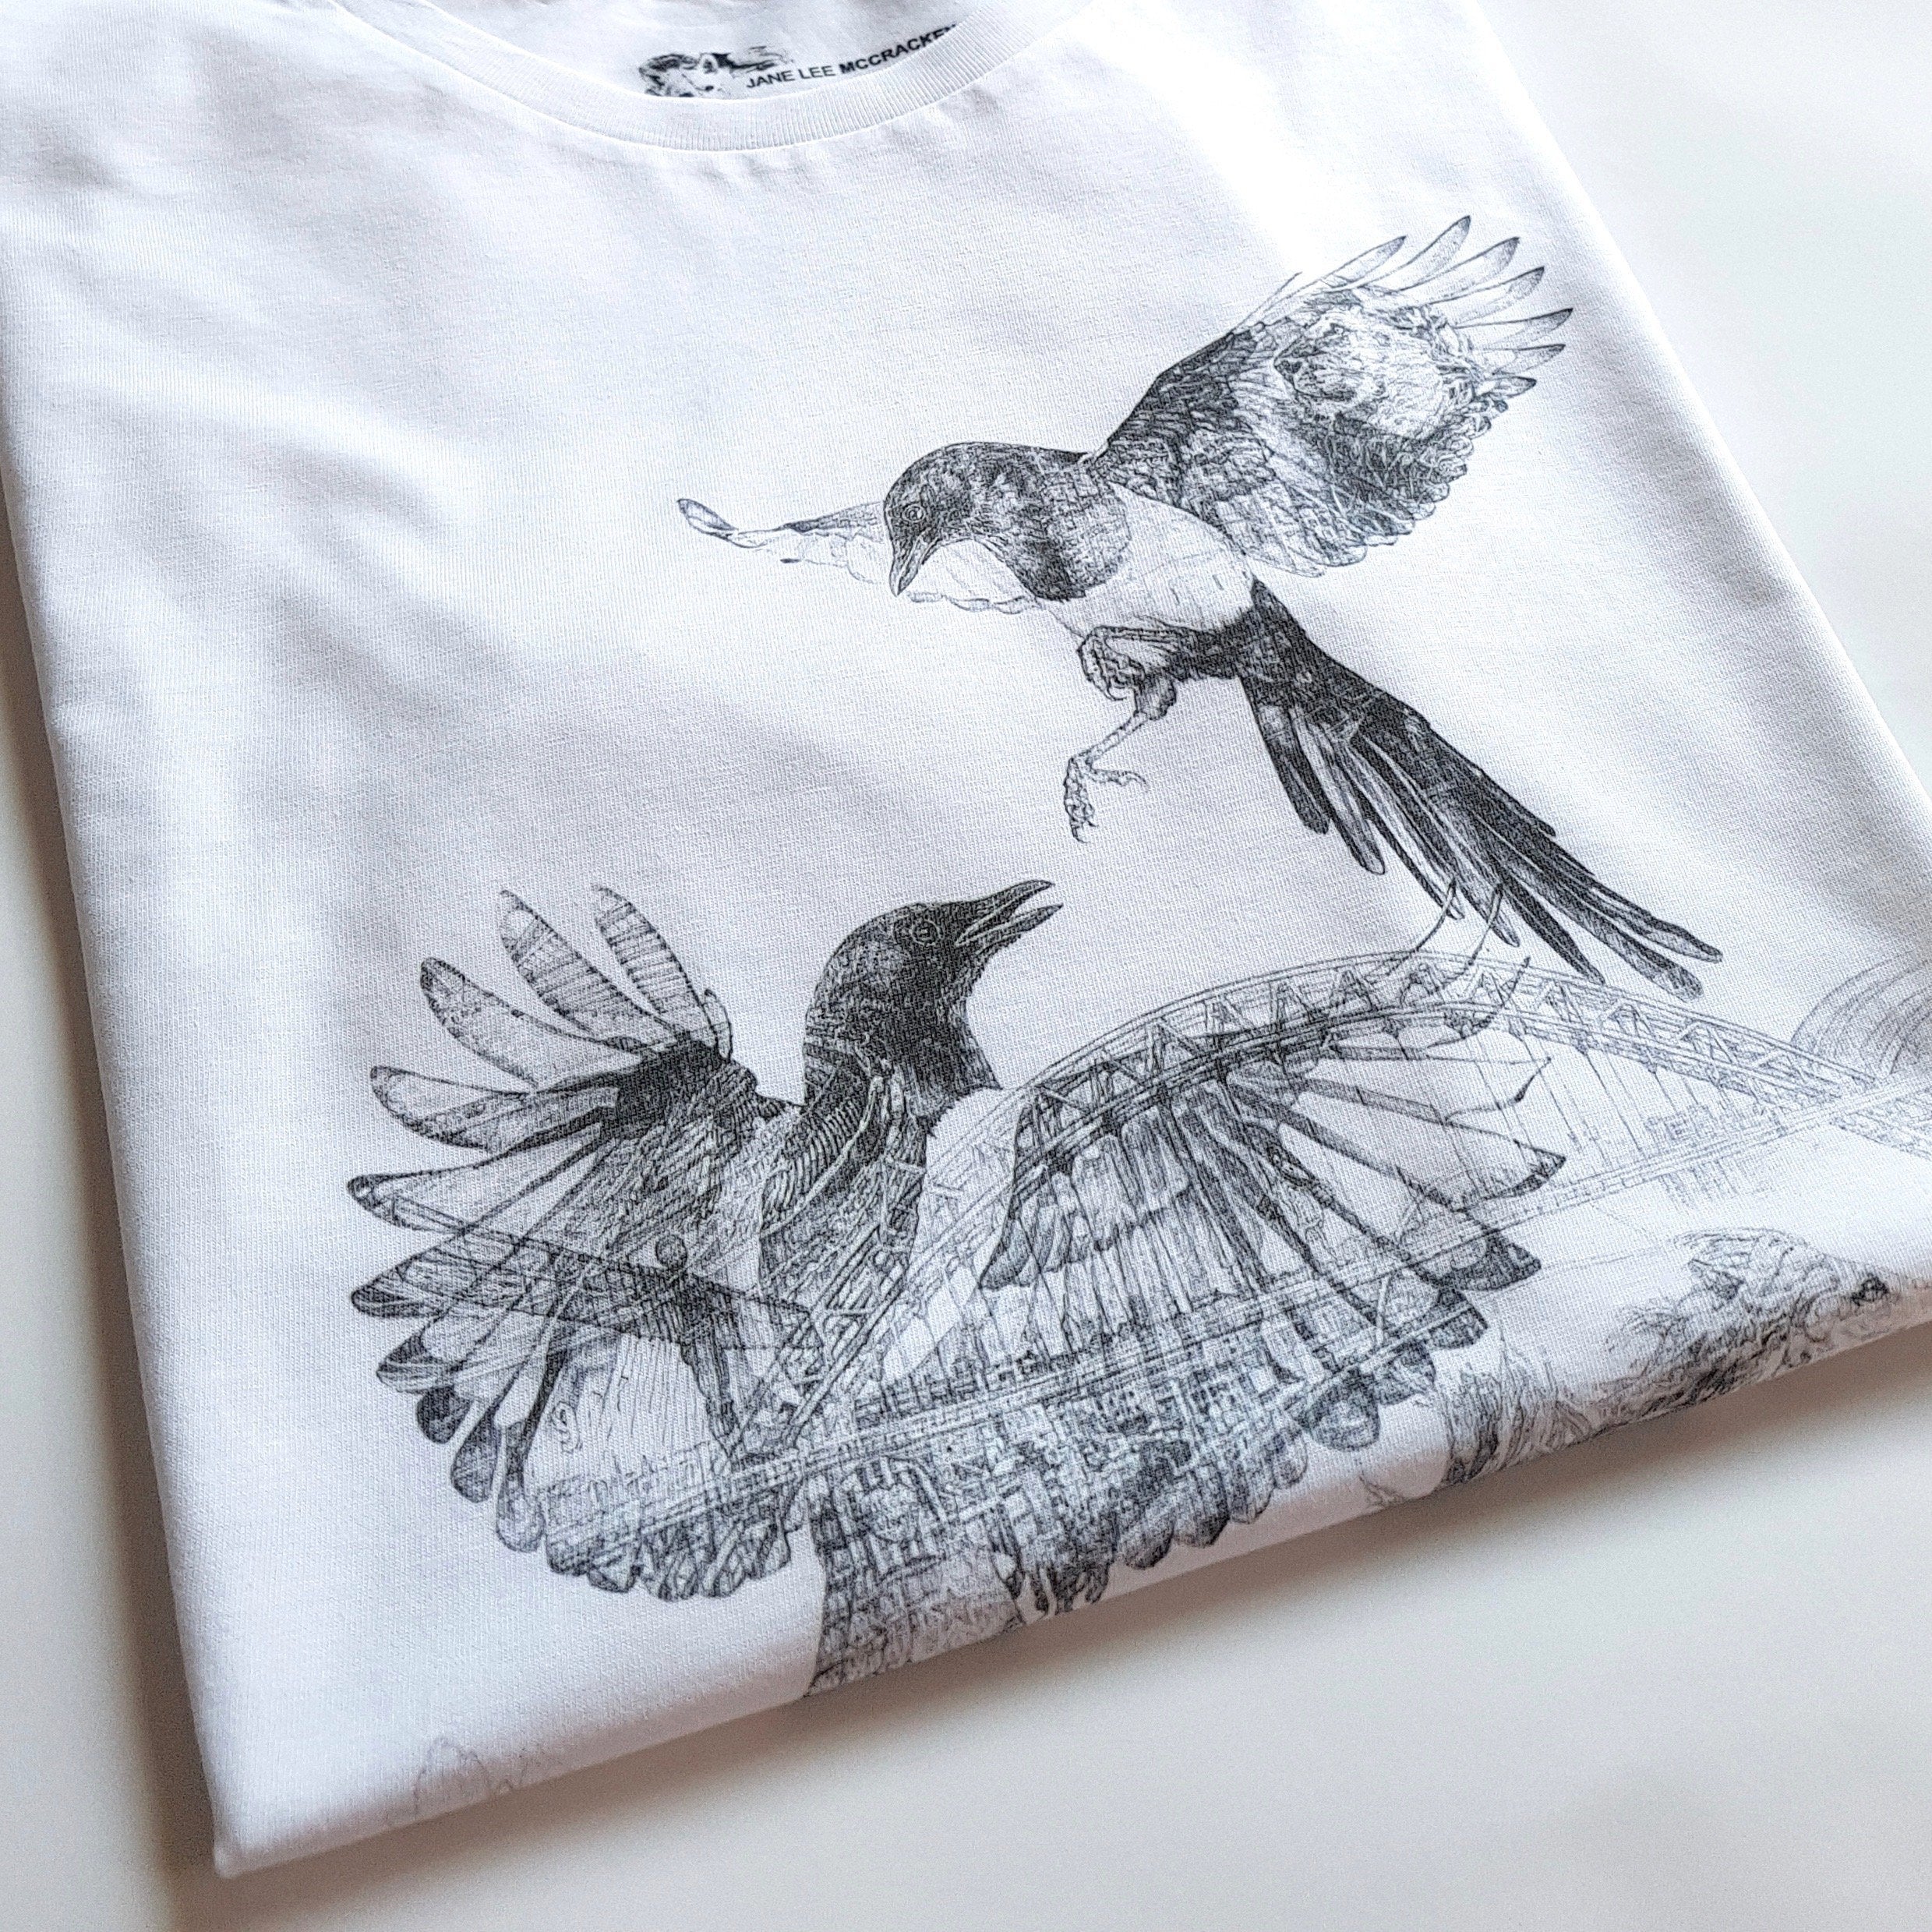 Magpies Men's Organic Cotton T-shirt